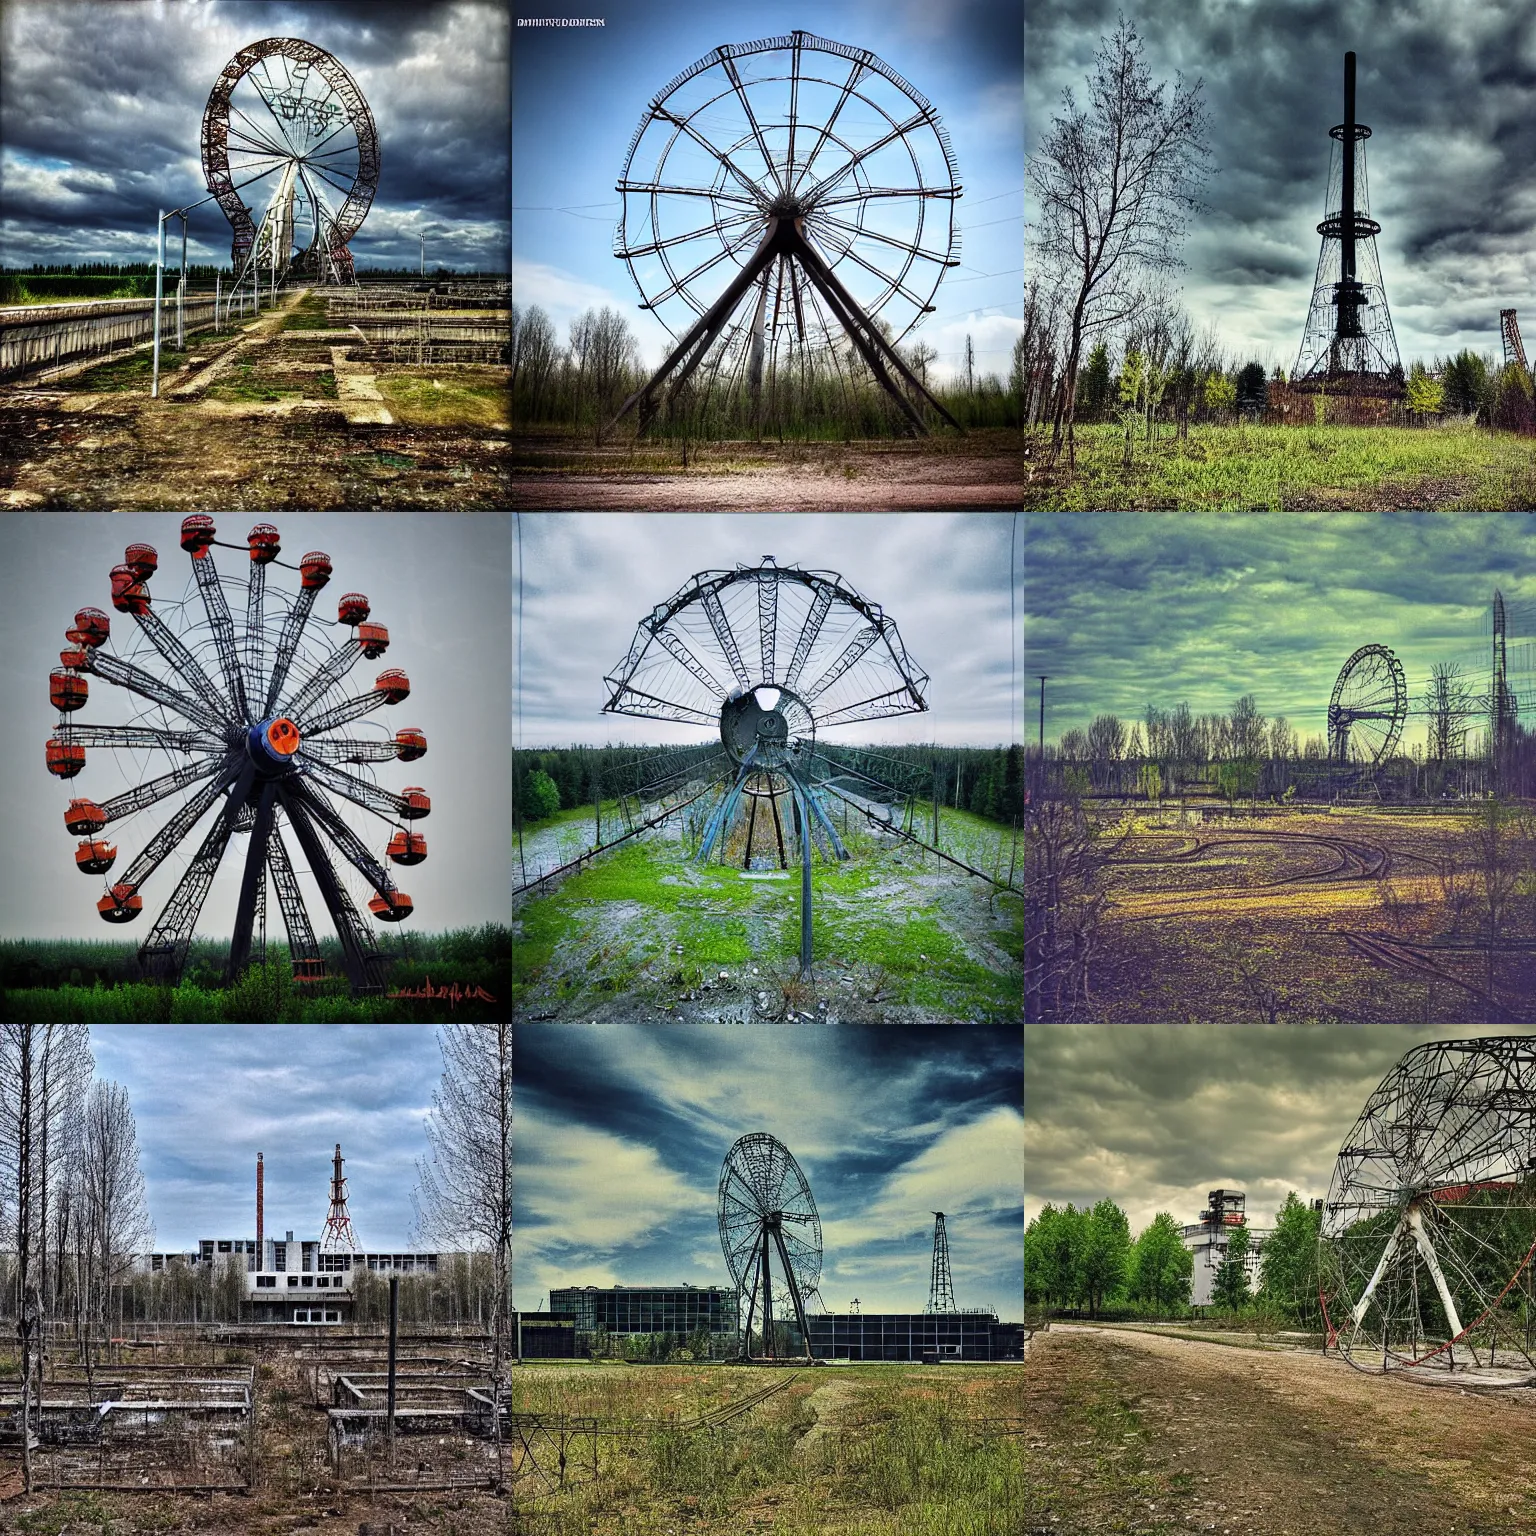 Prompt: “Chernobyl, digital high quality photo”